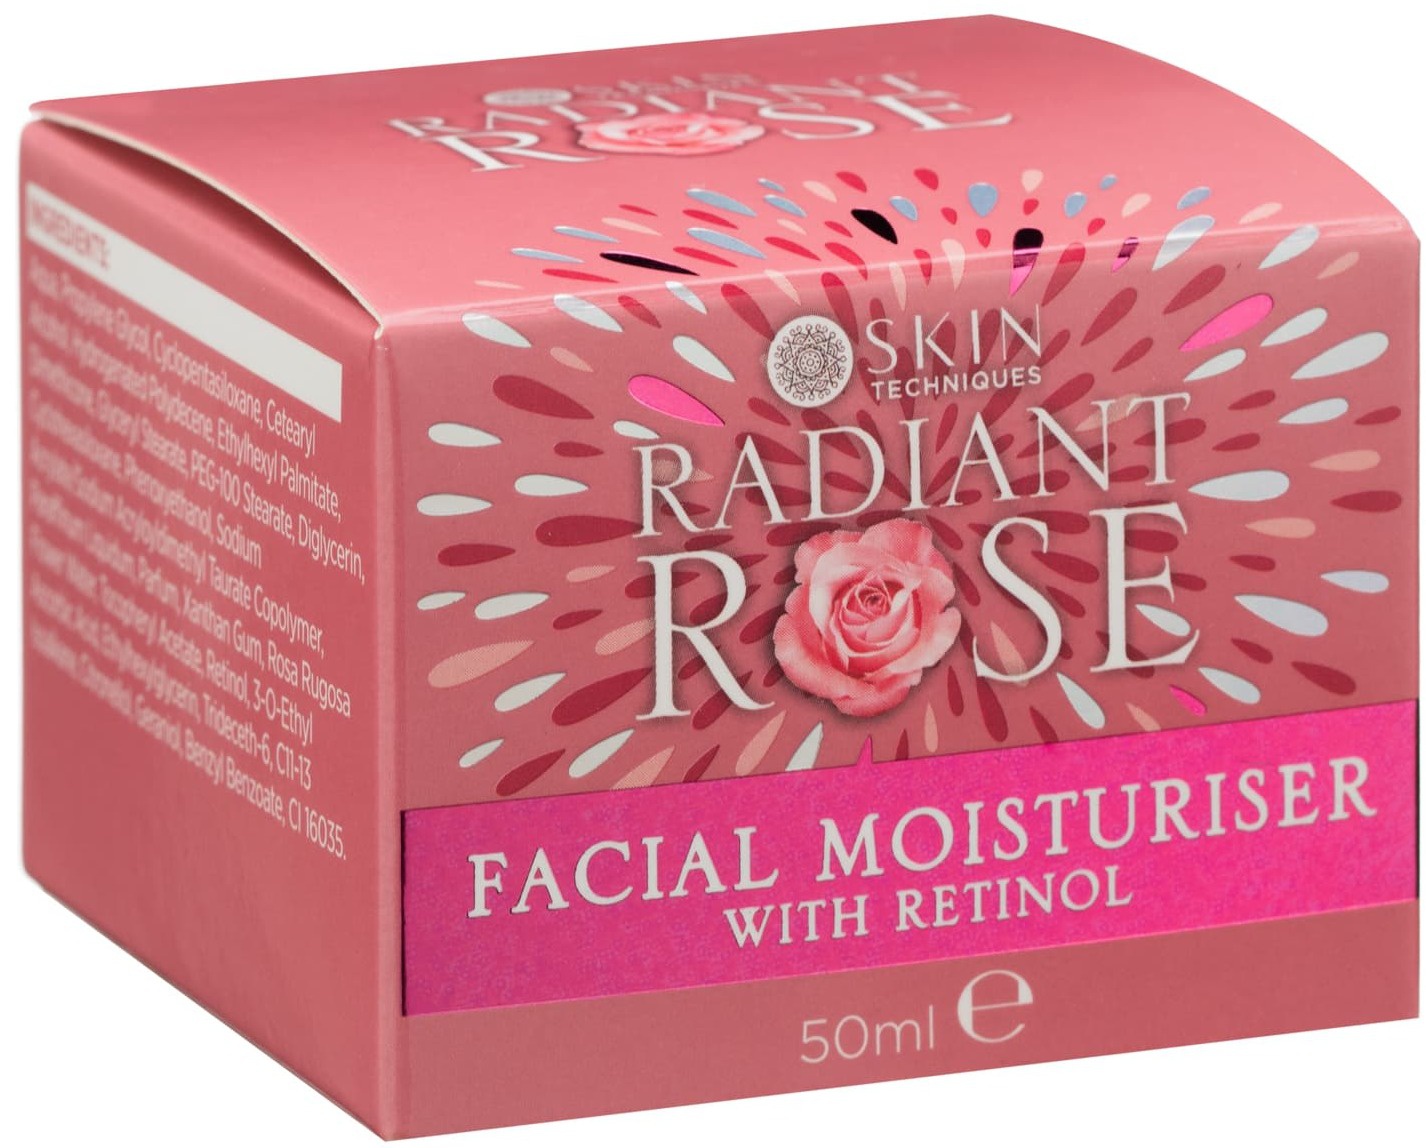 Skin techniques Radiant Rose Facial Moisturiser With Retinol